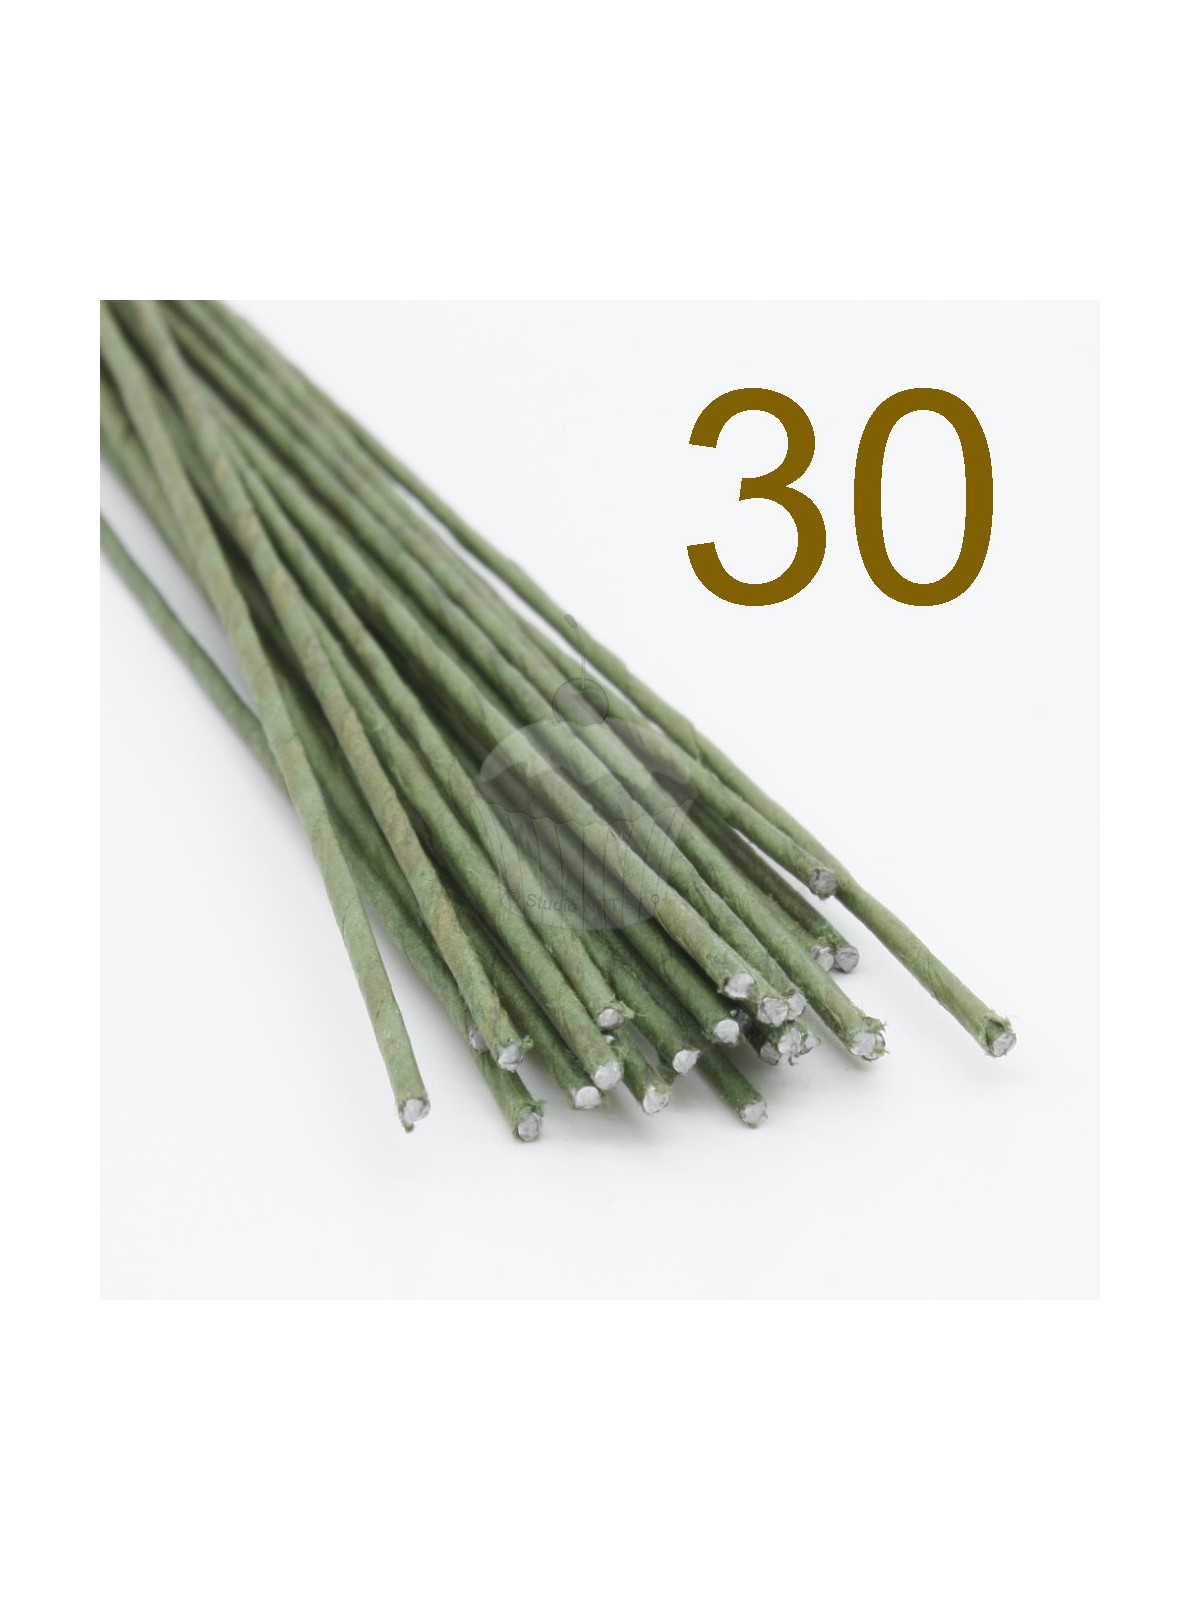 Caketools 30 Wire Floral green - 50pcs